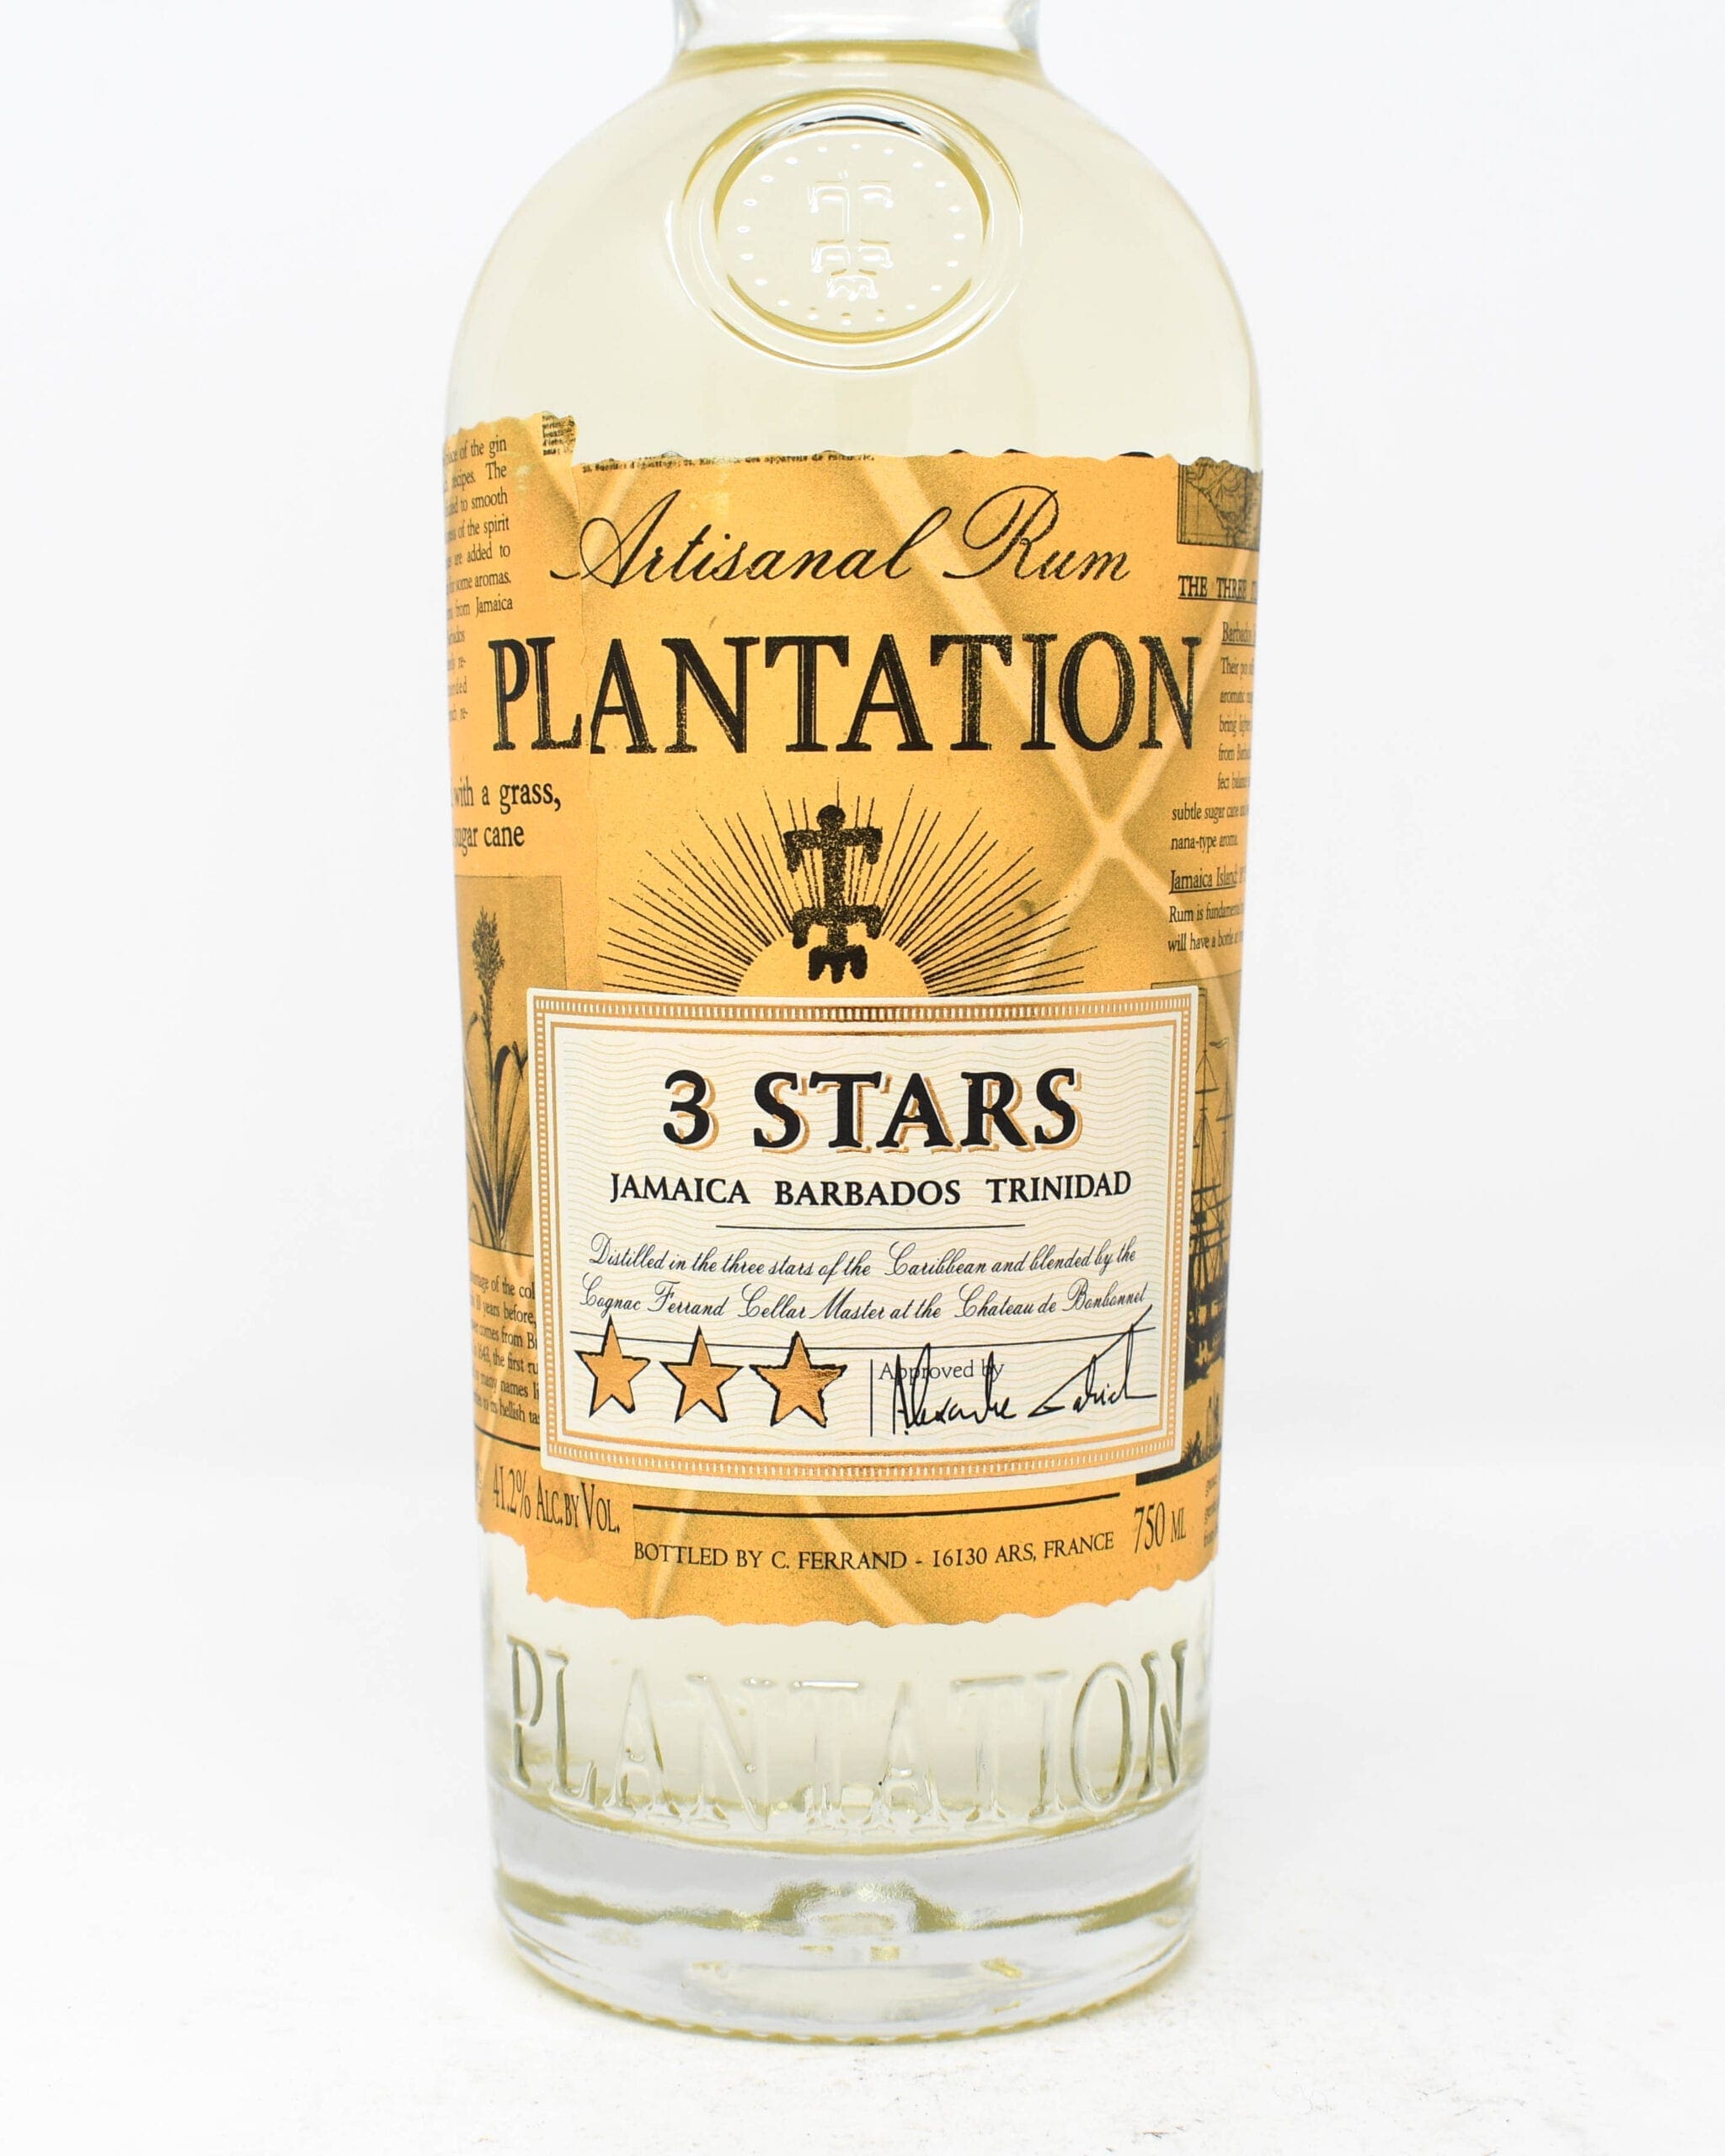 Plantation 3 stars – White rum — Plantation Rum